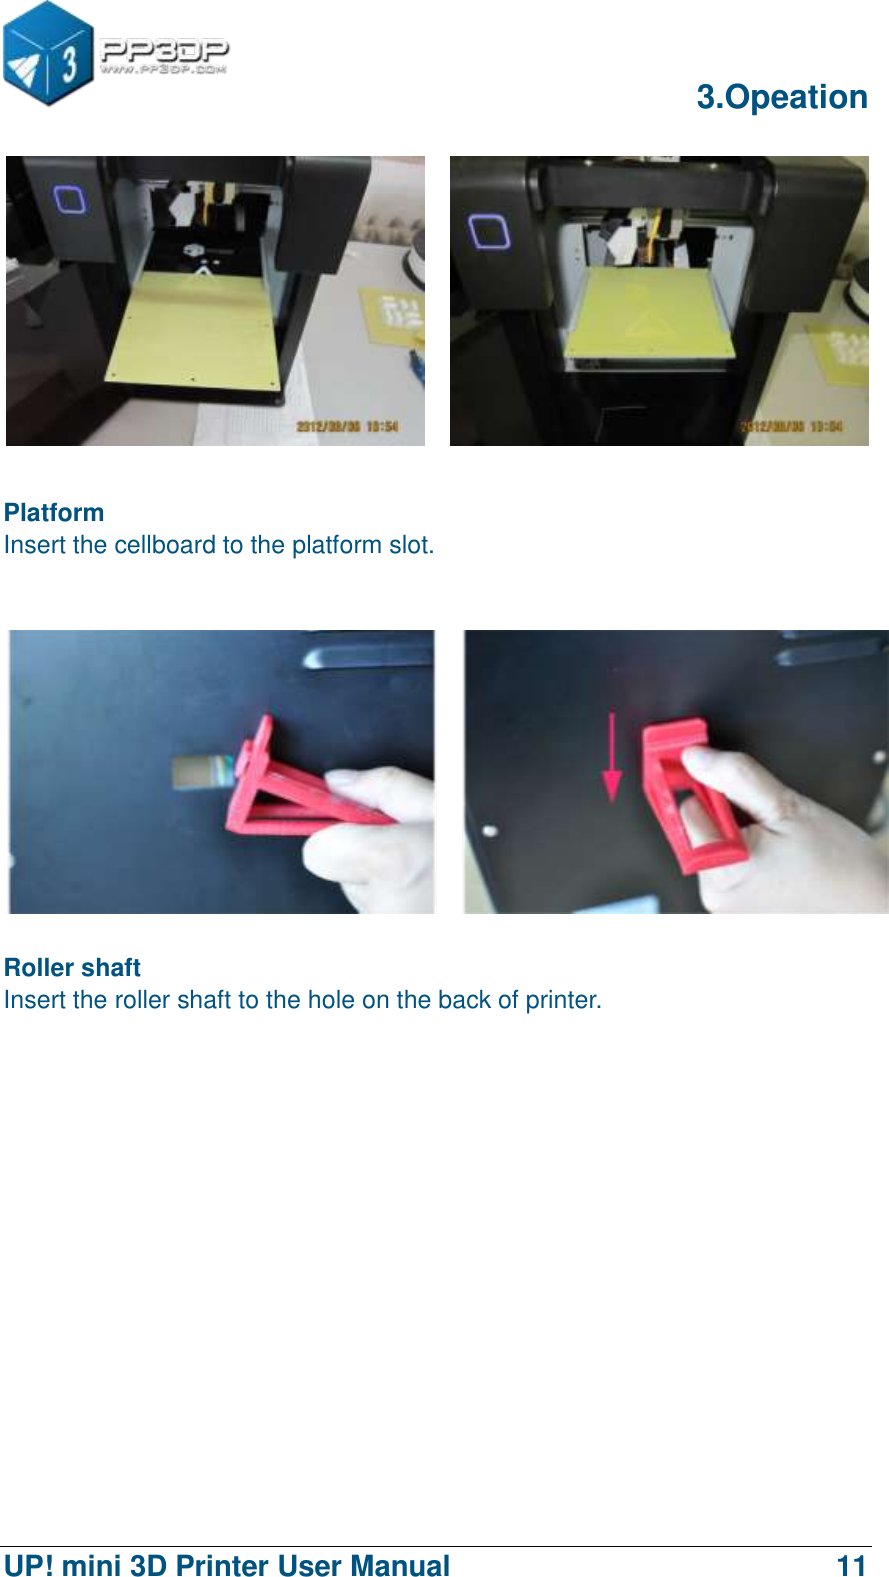      3.Opeation  UP! mini 3D Printer User Manual                                11      Platform Insert the cellboard to the platform slot.     Roller shaft Insert the roller shaft to the hole on the back of printer.    